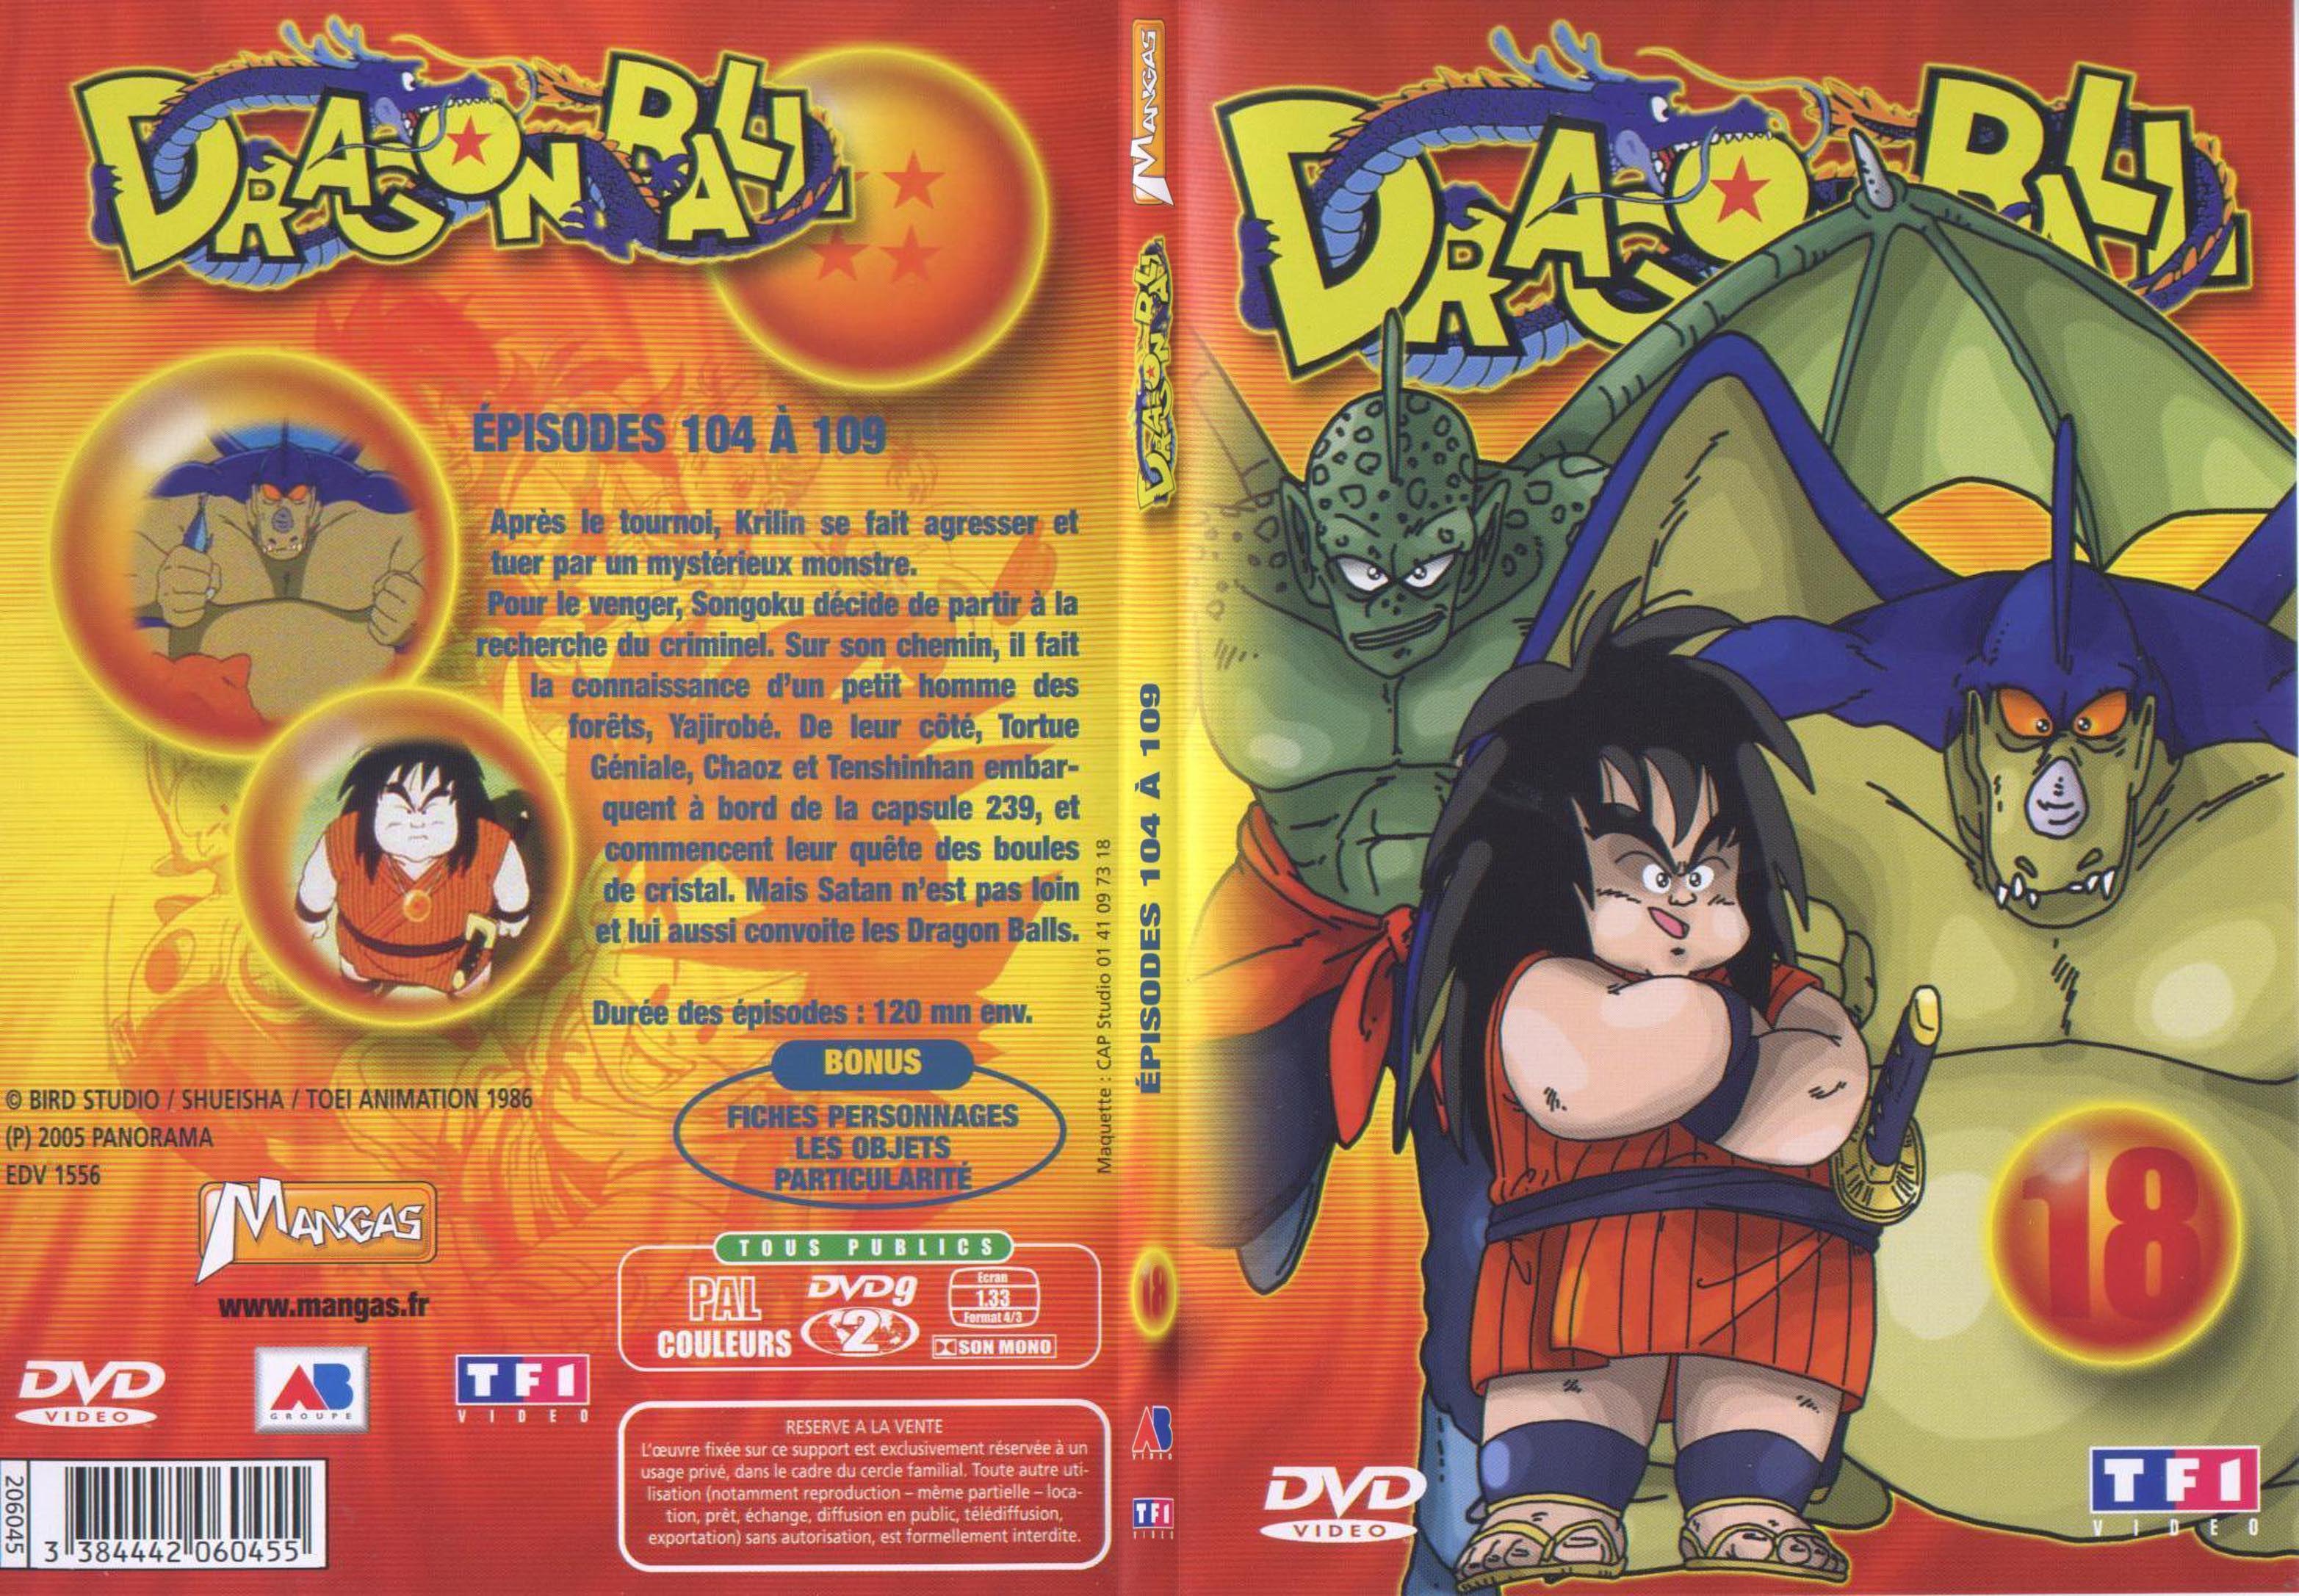 Jaquette DVD Dragon ball vol 18 - SLIM